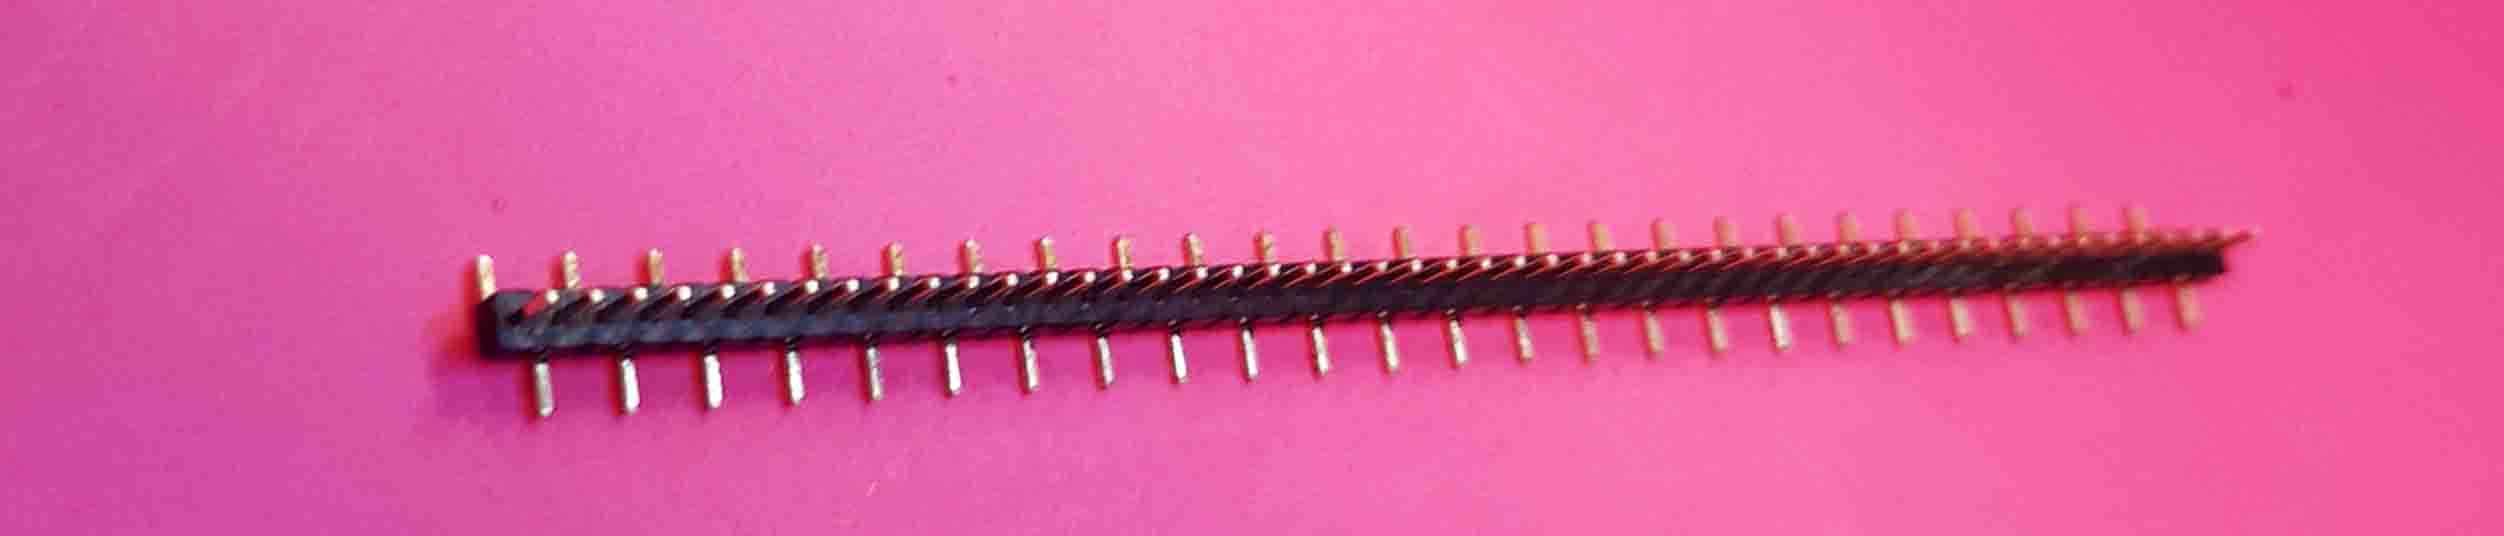 Pin Header 1.00 mm pitch -1*50 SMD